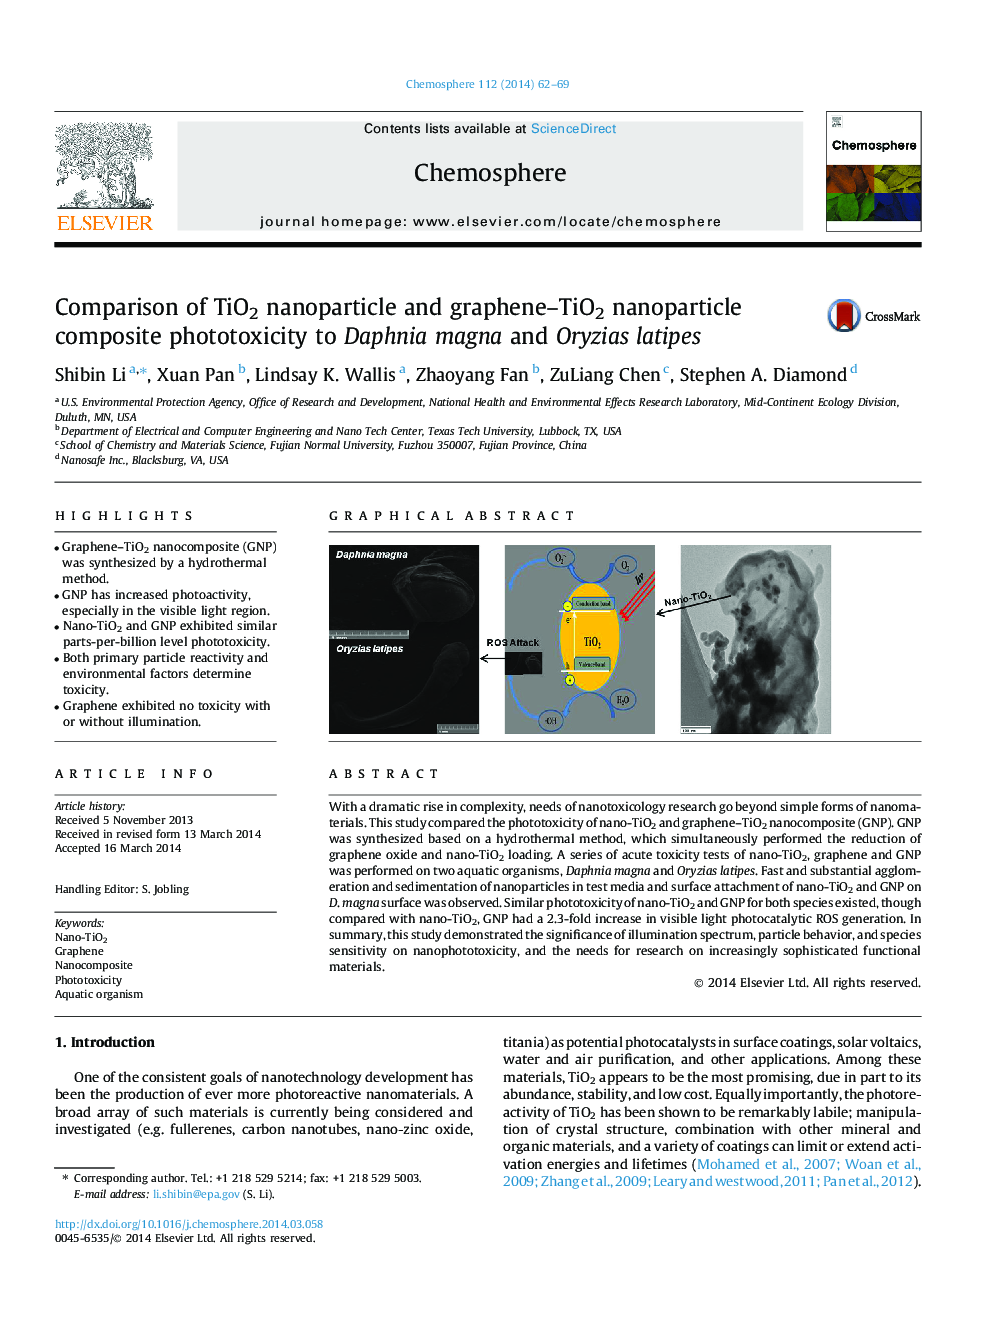 Comparison of TiO2 nanoparticle and graphene-TiO2 nanoparticle composite phototoxicity to Daphnia magna and Oryzias latipes